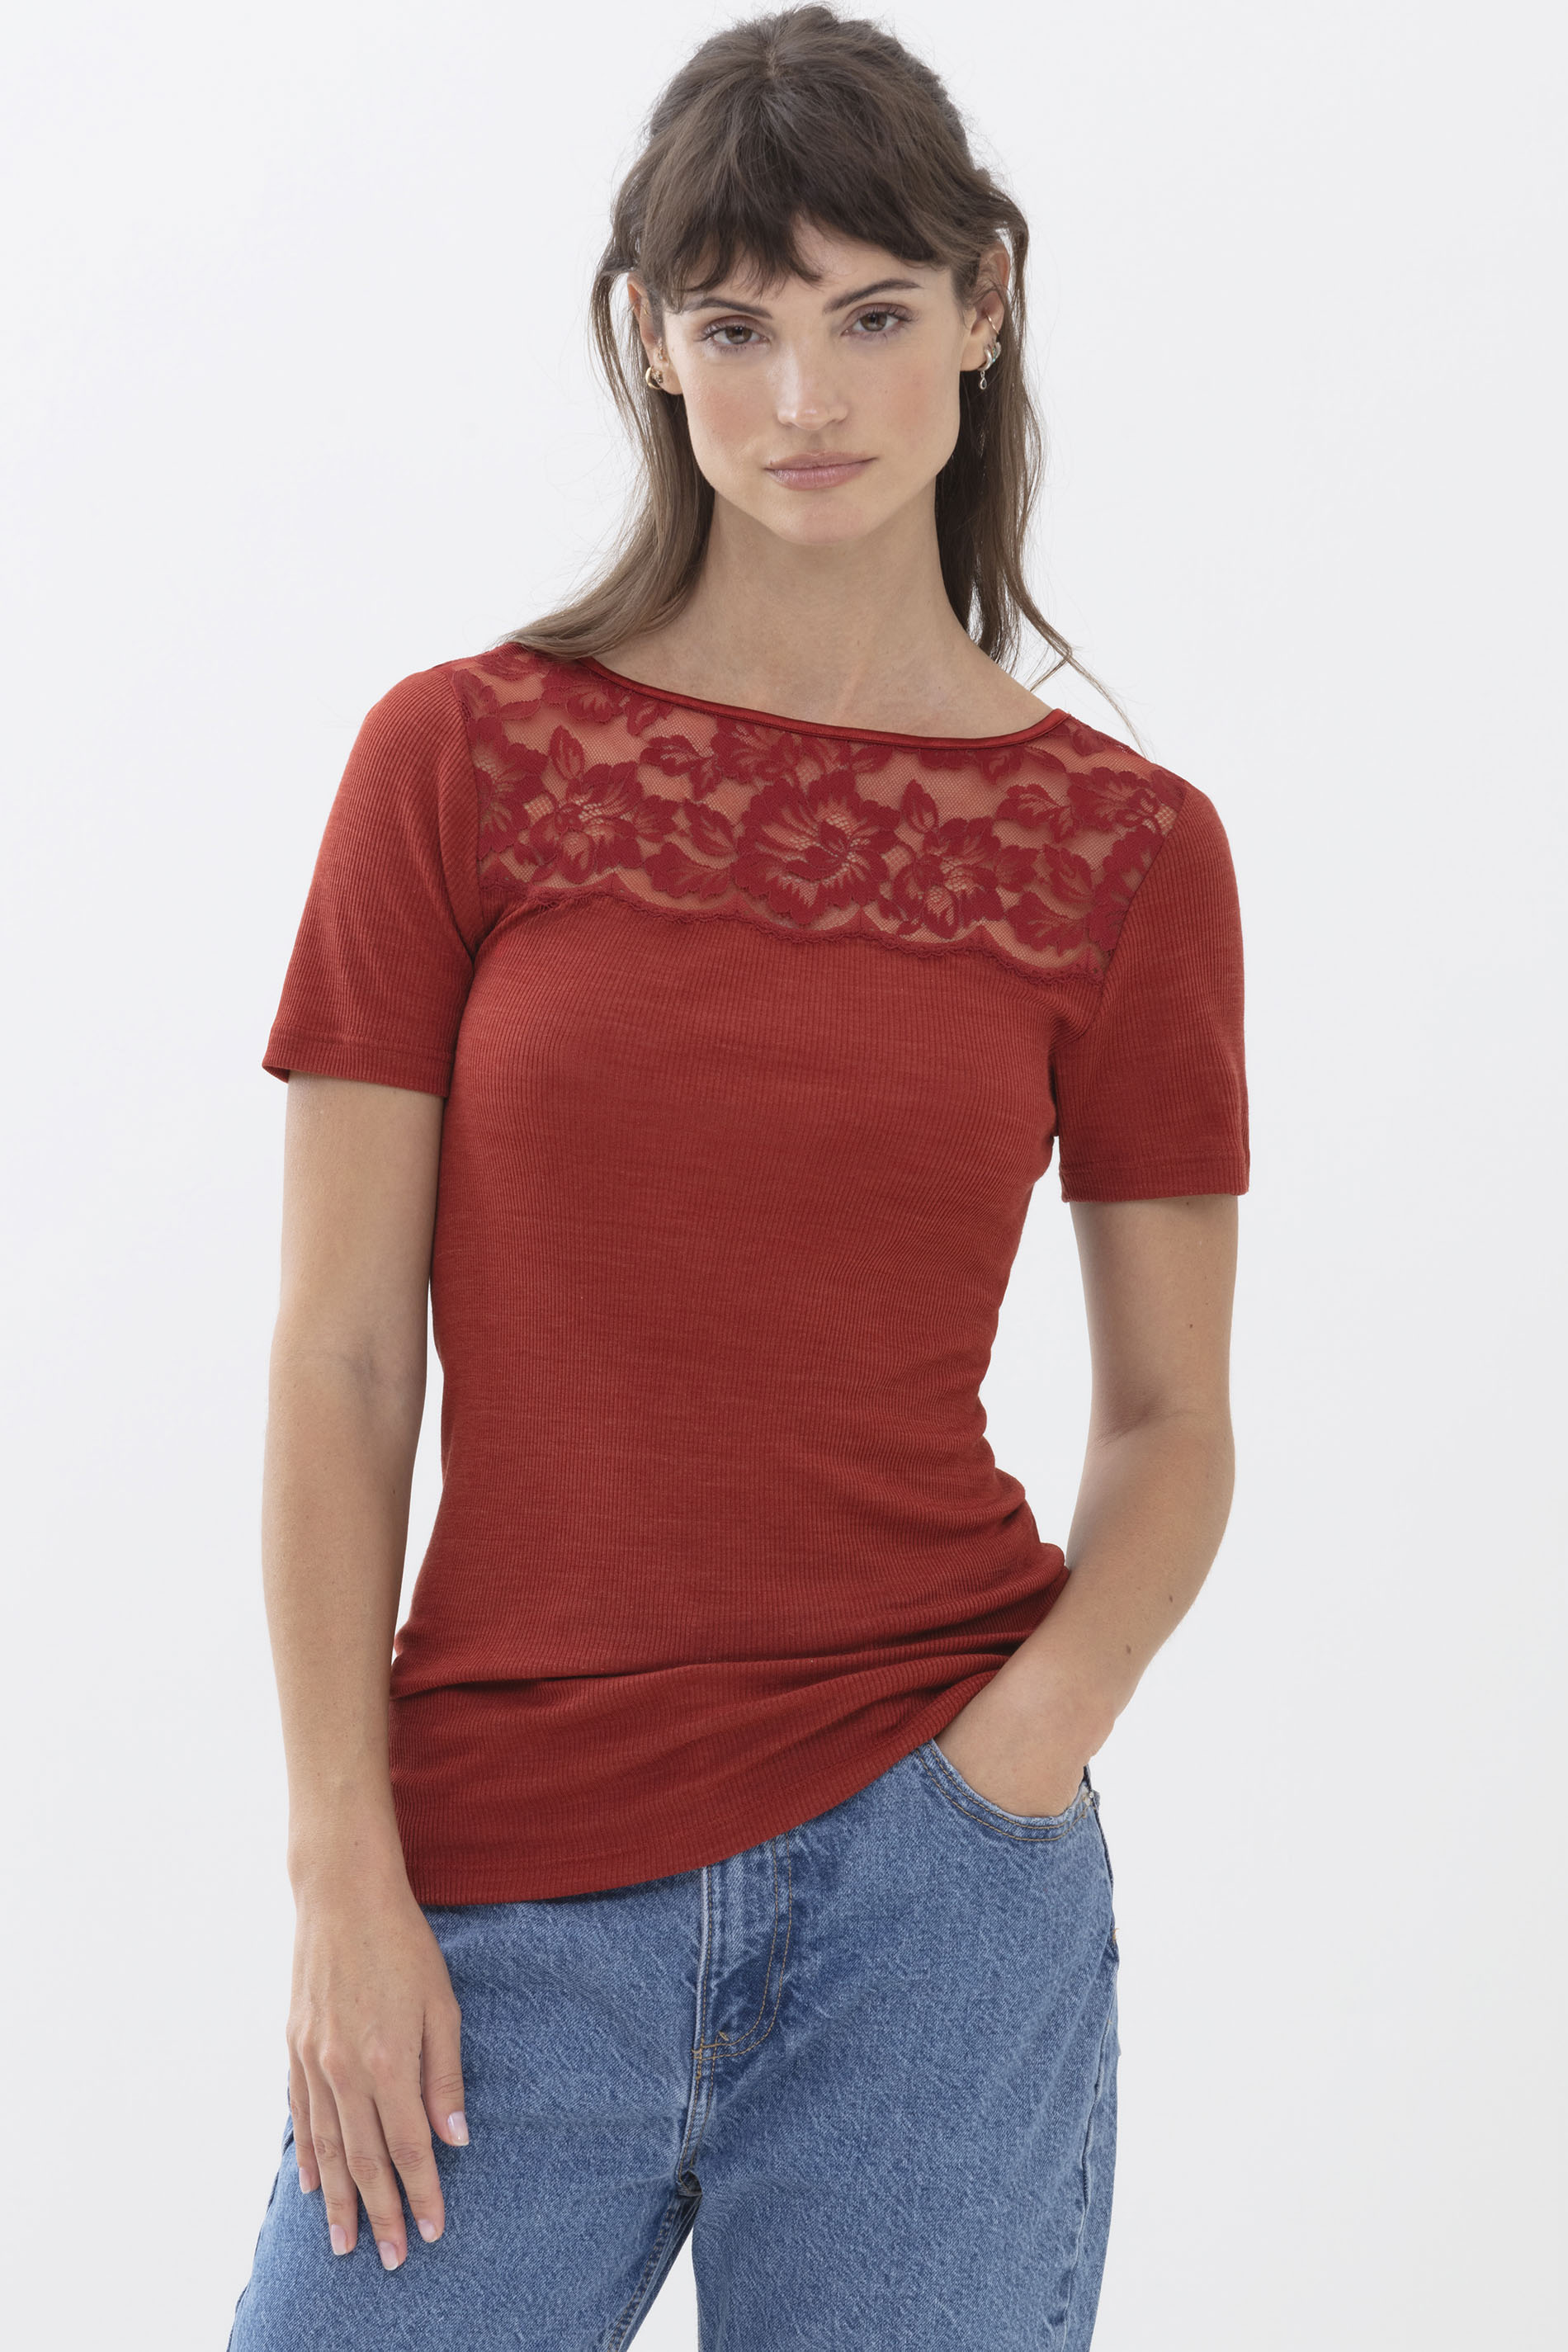 Kurzarm-Shirt Red Pepper Serie Amazing Silk Rib Frontansicht | mey®